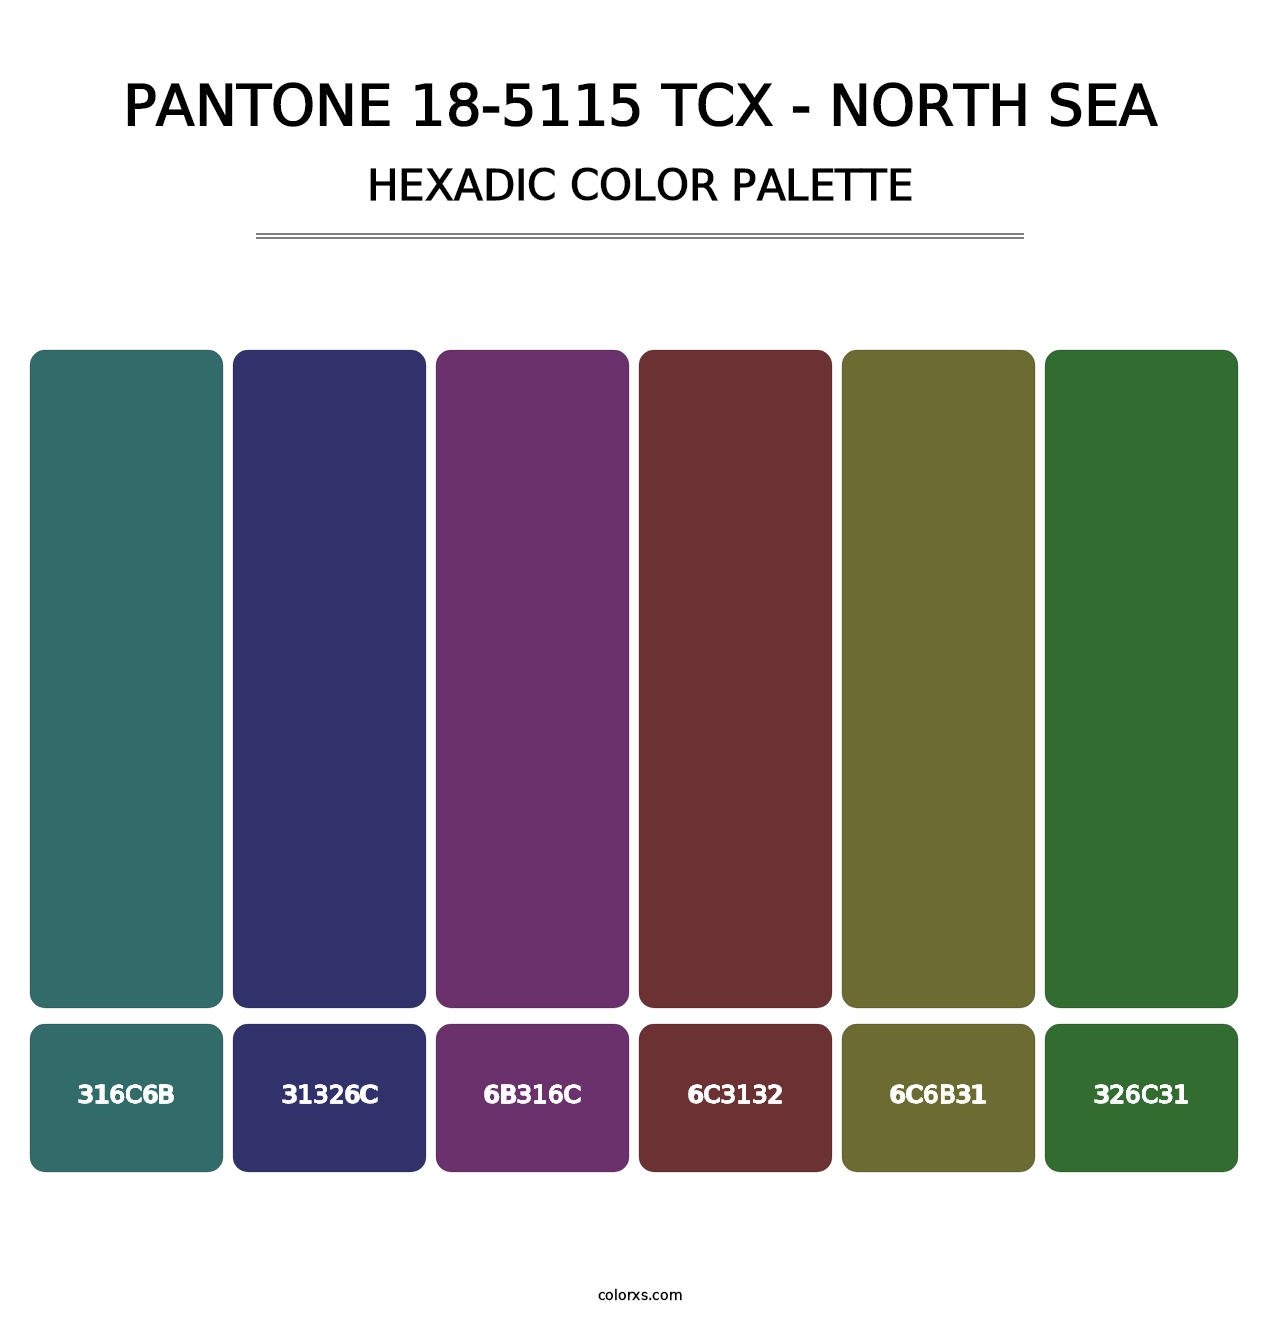 PANTONE 18-5115 TCX - North Sea - Hexadic Color Palette